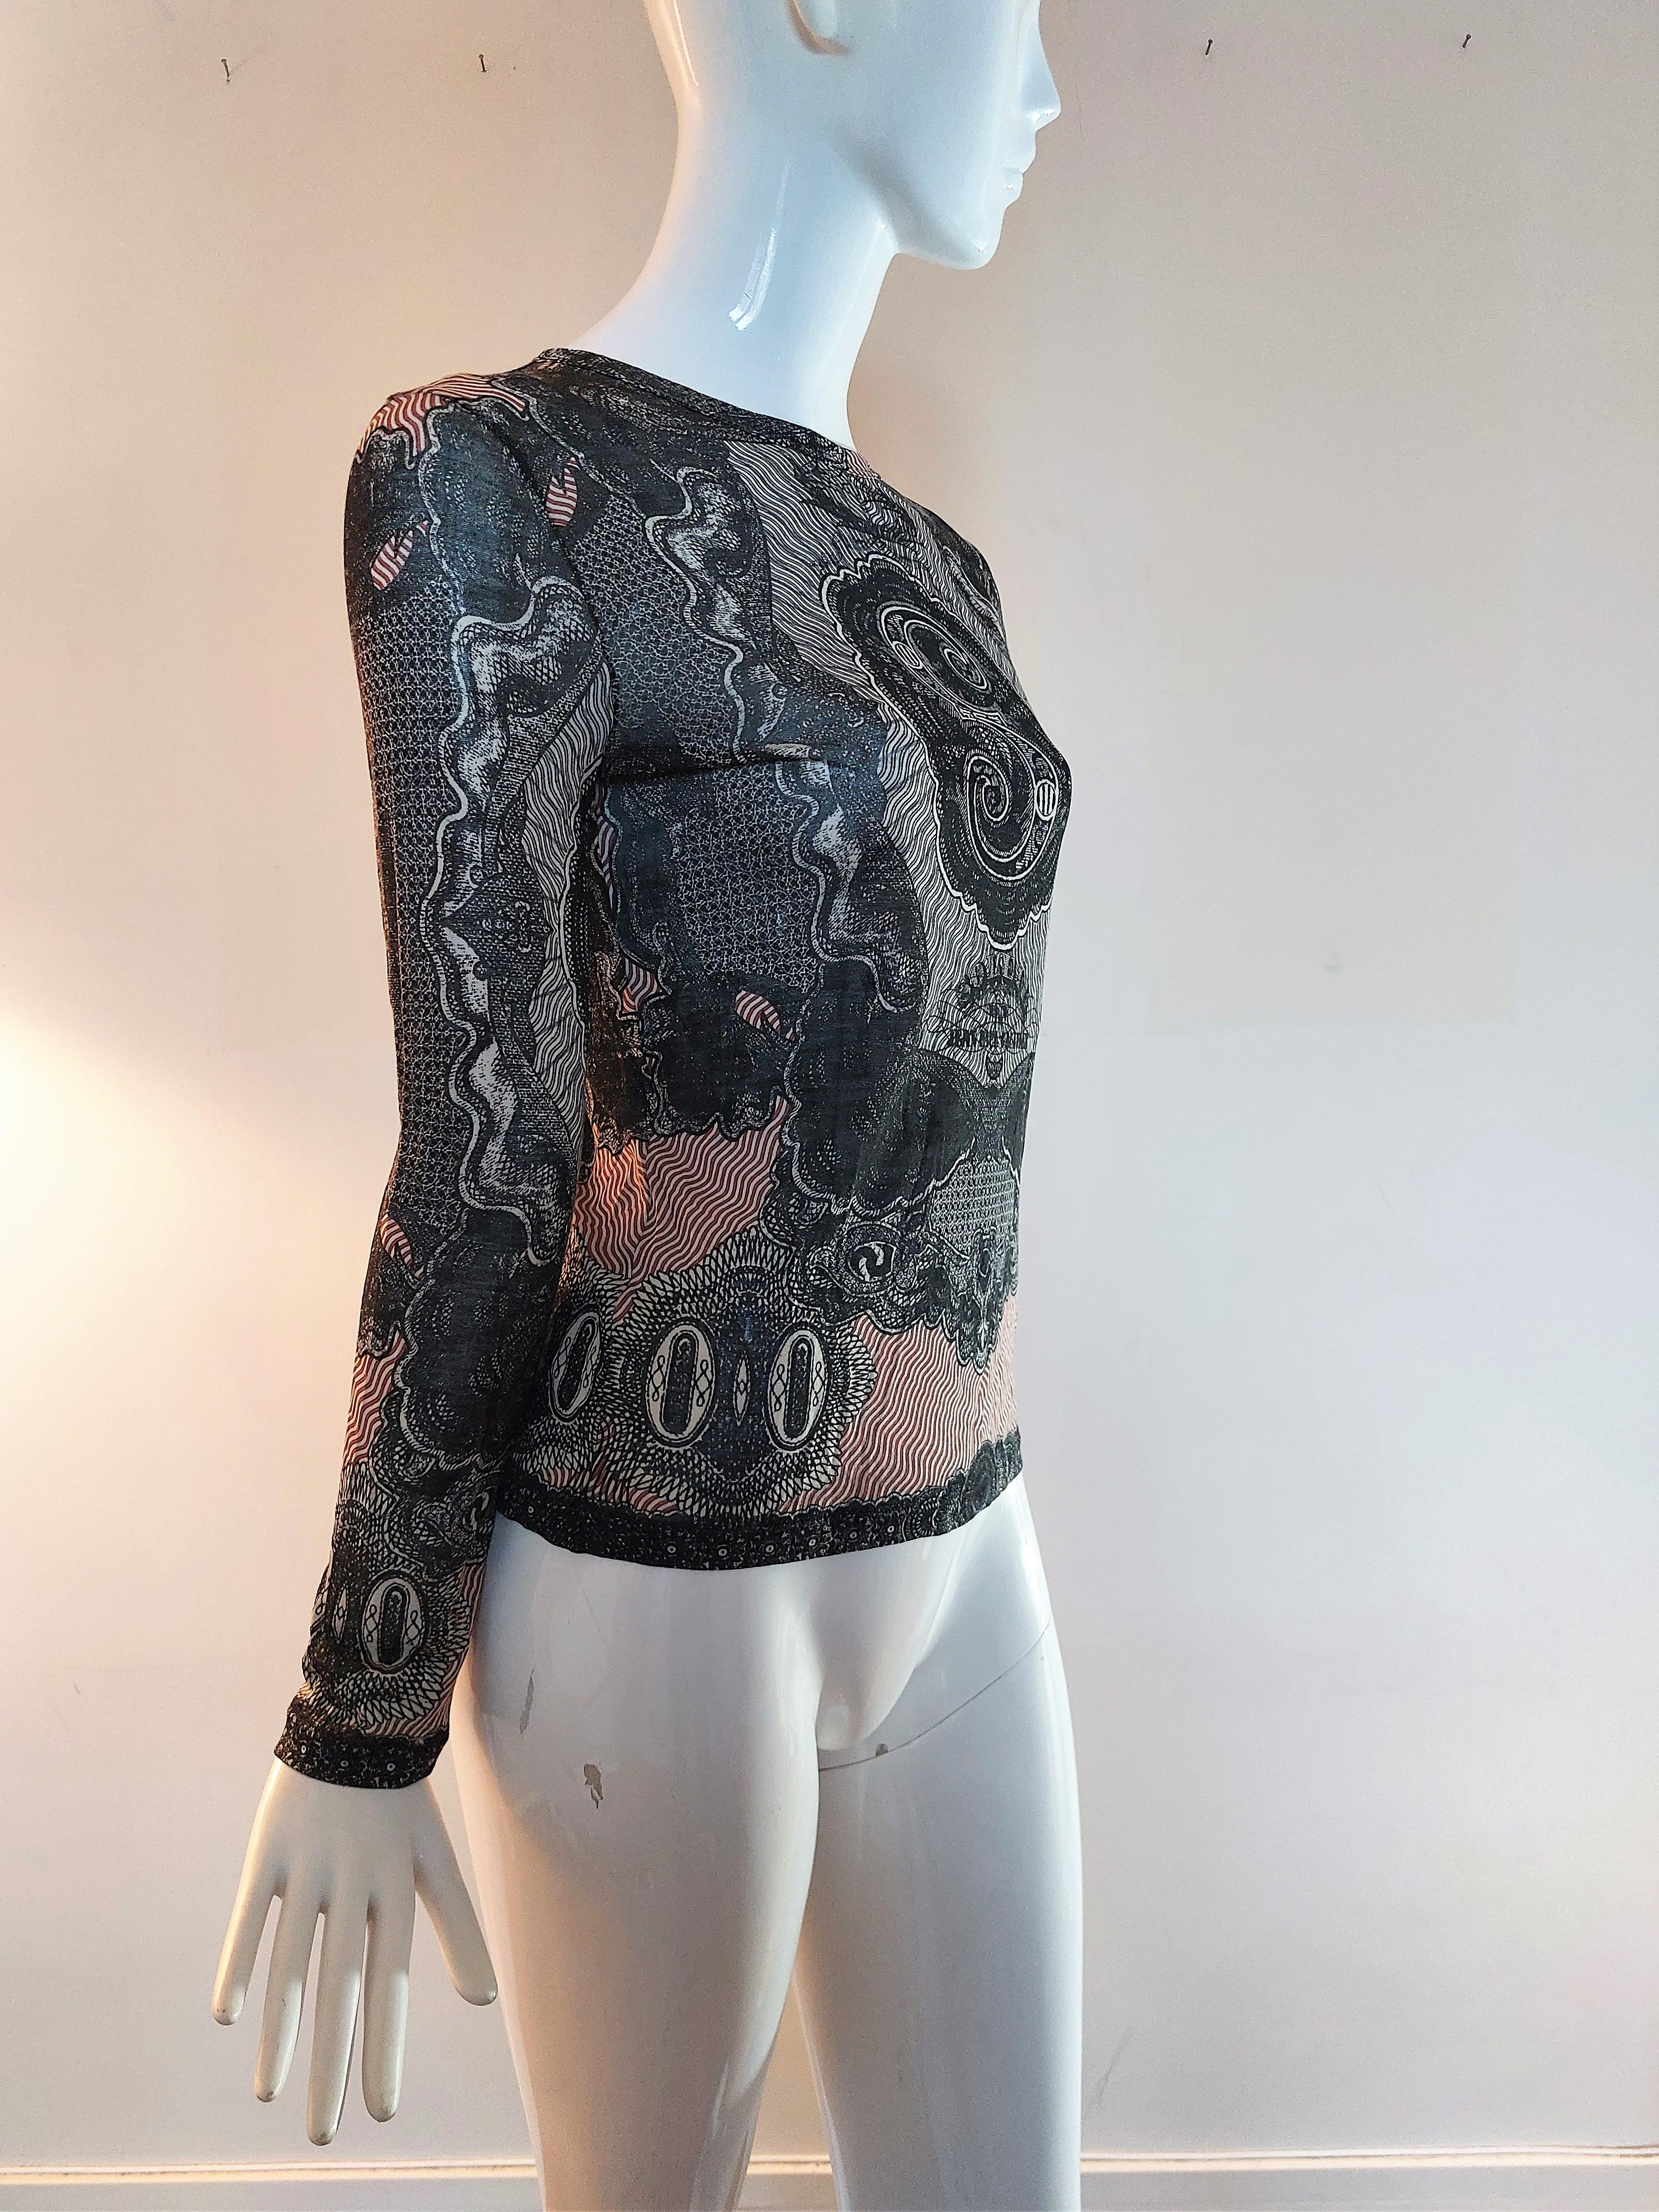 Jean Paul Gaultier Bill Banknote Money Mesh Tattoo 1994 S/S Unisex Top Shirt Tee For Sale 3